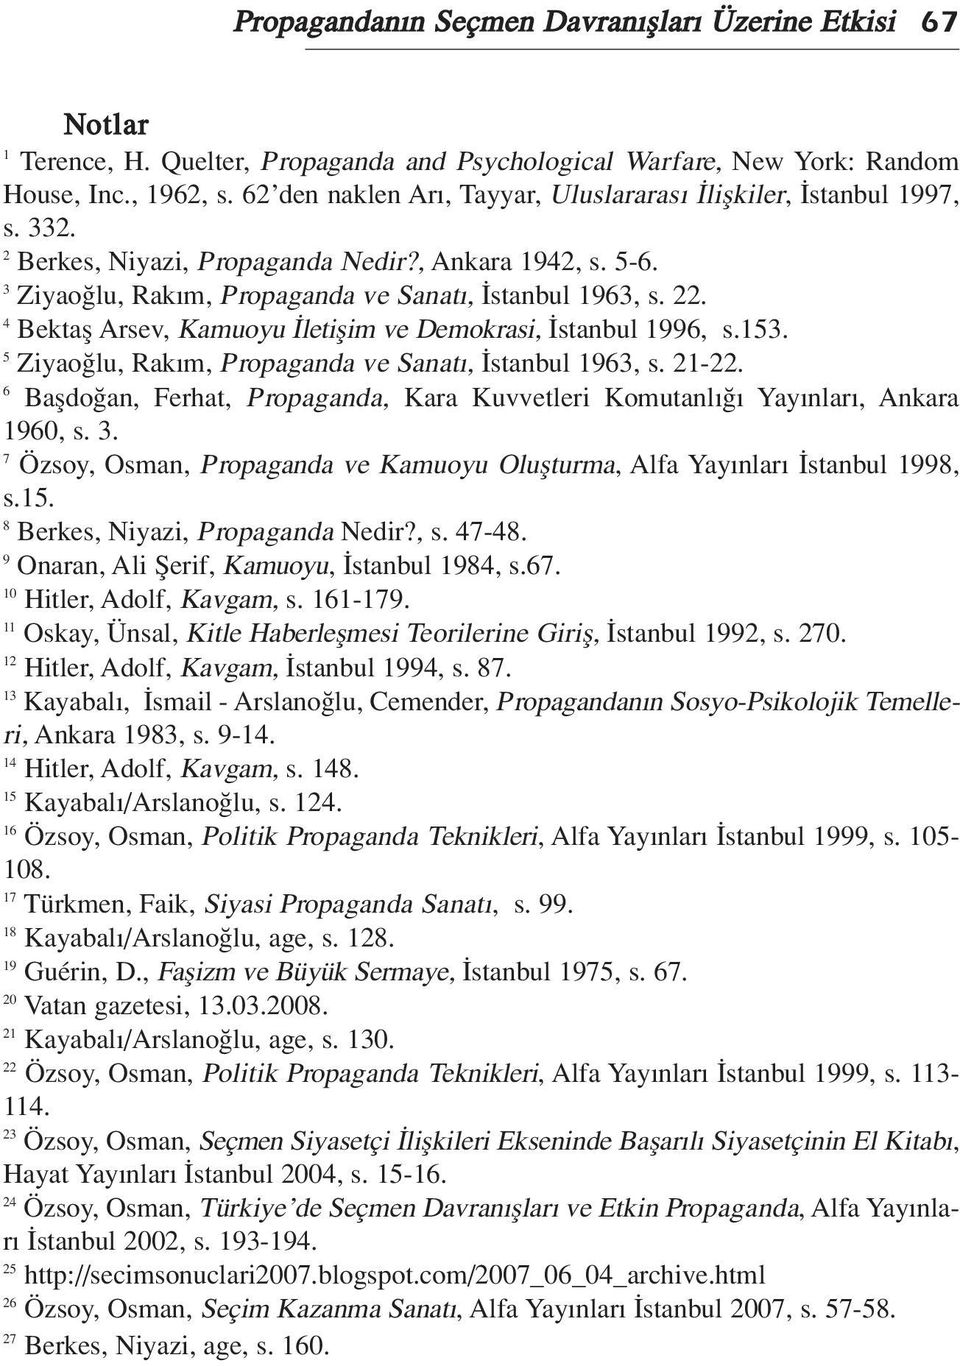 4 Bektafl Arsev, Kamuoyu letiflim ve Demokrasi, stanbul 1996, s.153. 5 Ziyao lu, Rak m, Propaganda ve Sanat, stanbul 1963, s. 21-22.